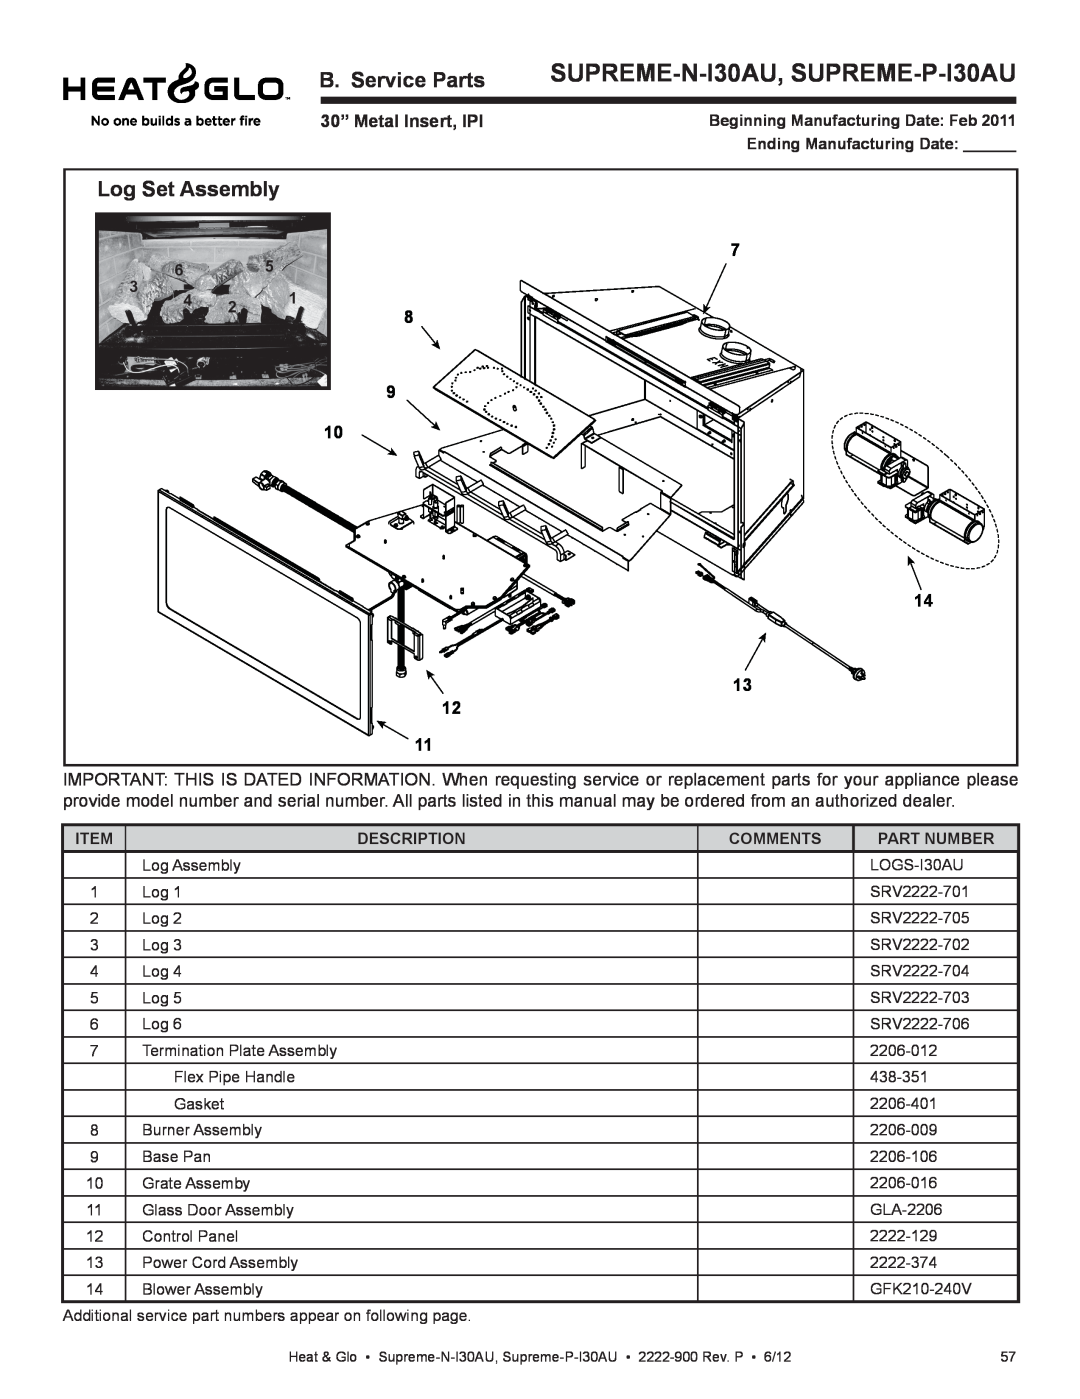 Heat & Glo LifeStyle SUPREME-N-I30AU, SUPREME-P-I30AU, B. Service Parts, Log Set Assembly, 30” Metal Insert, IPI 